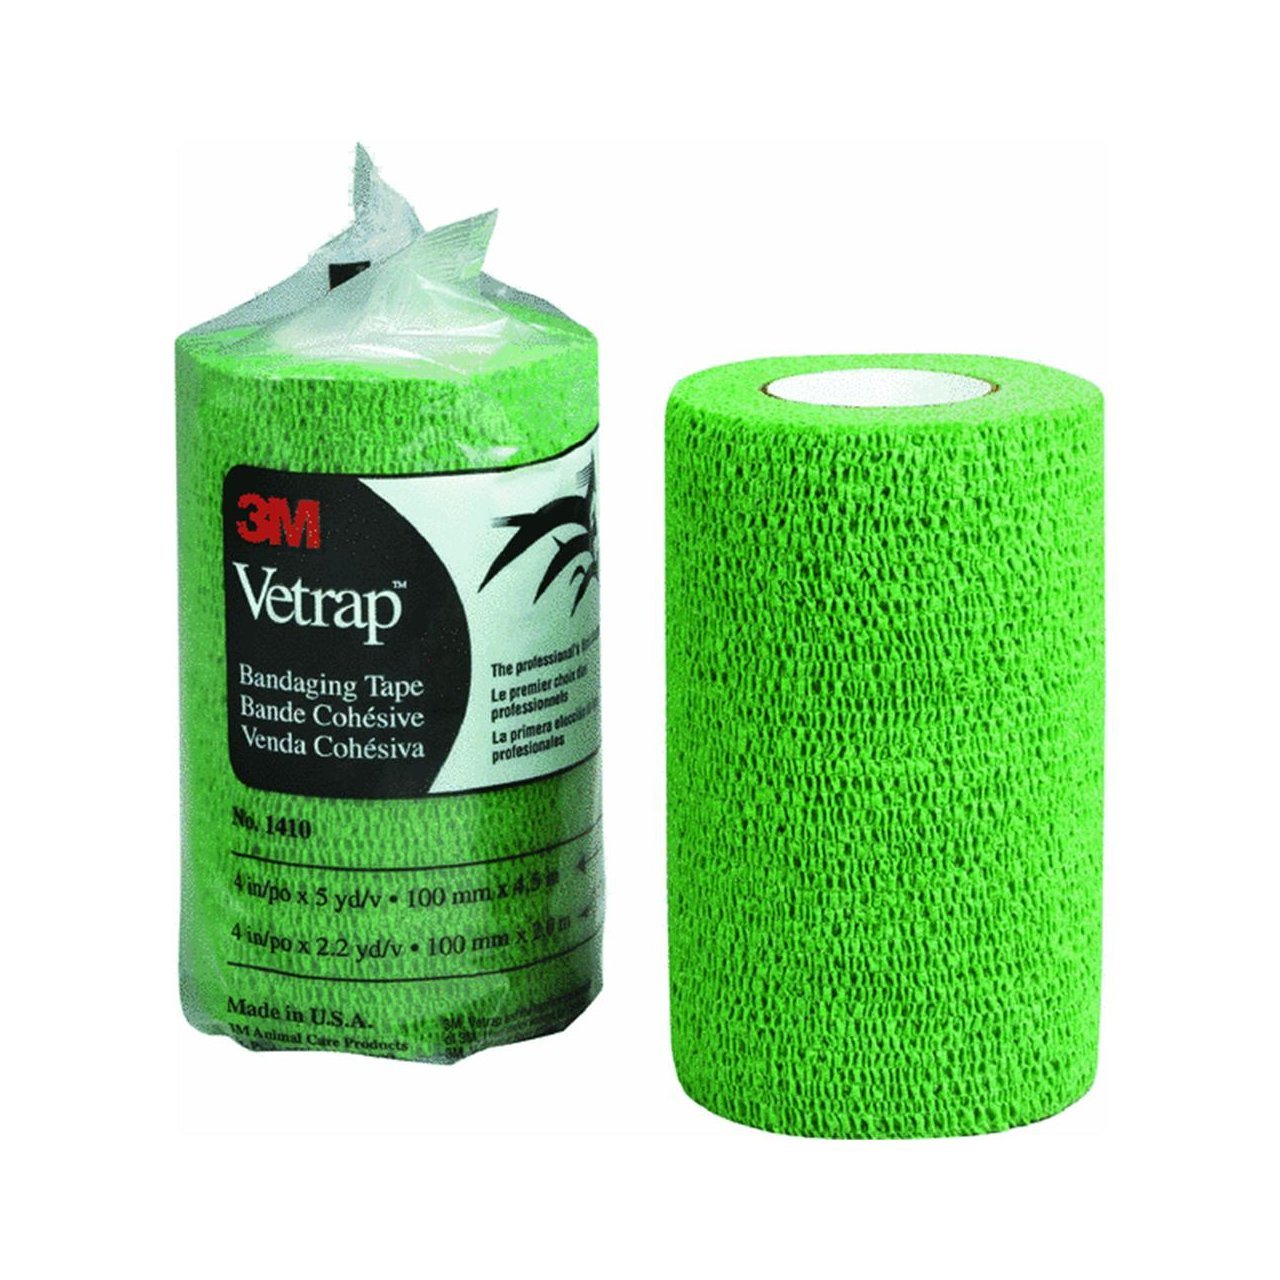 3m Vetrap Bandage Tape, 2" X 5 Yard Roll, Green